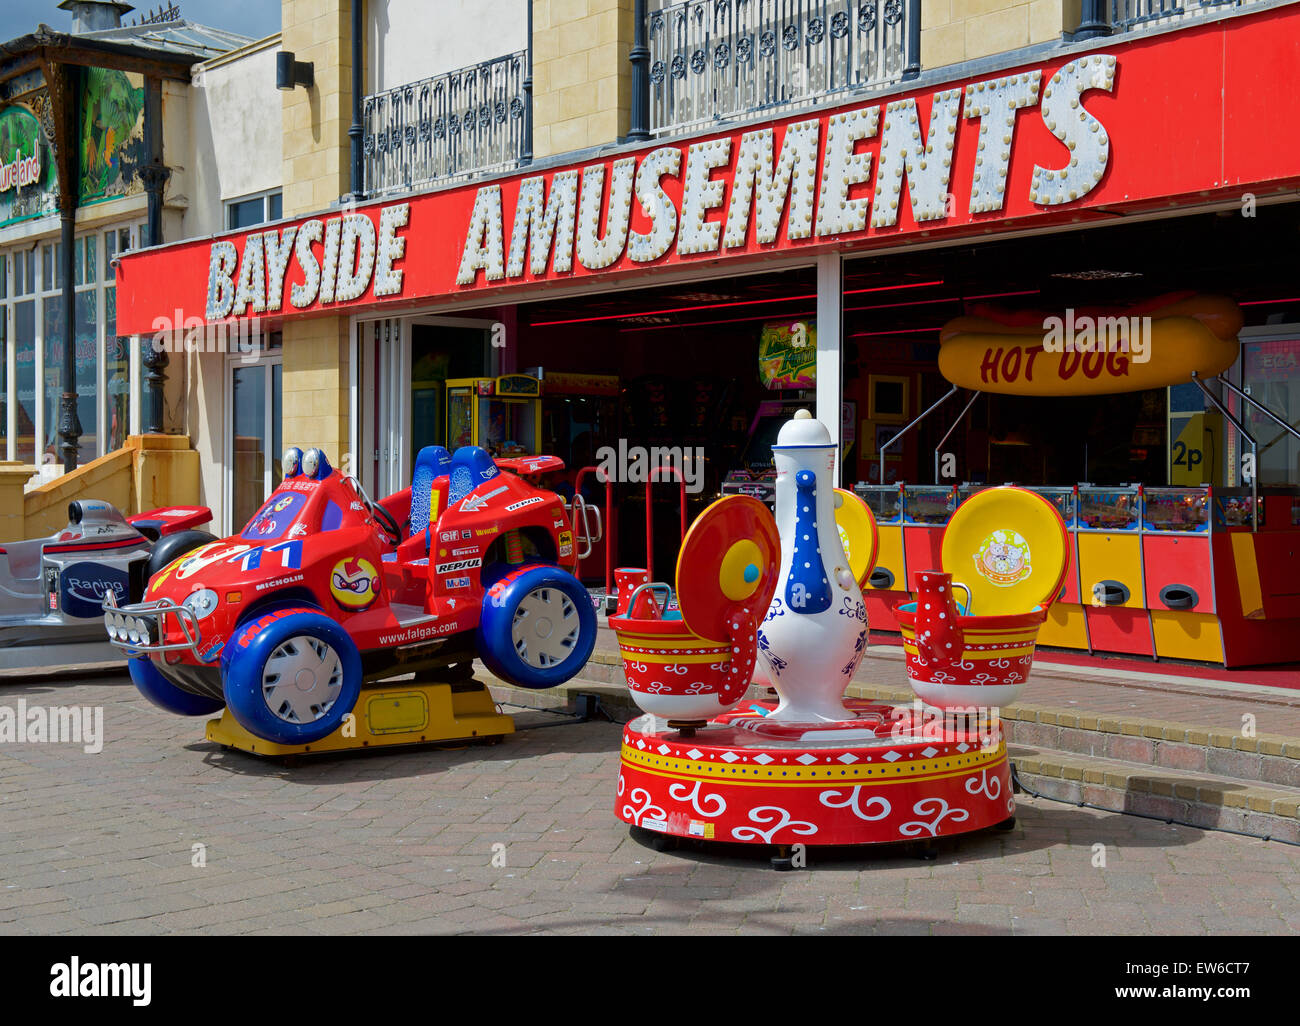 Amusement arcade on the promenade, Bridlington, East Yorkshire, England UK Stock Photo